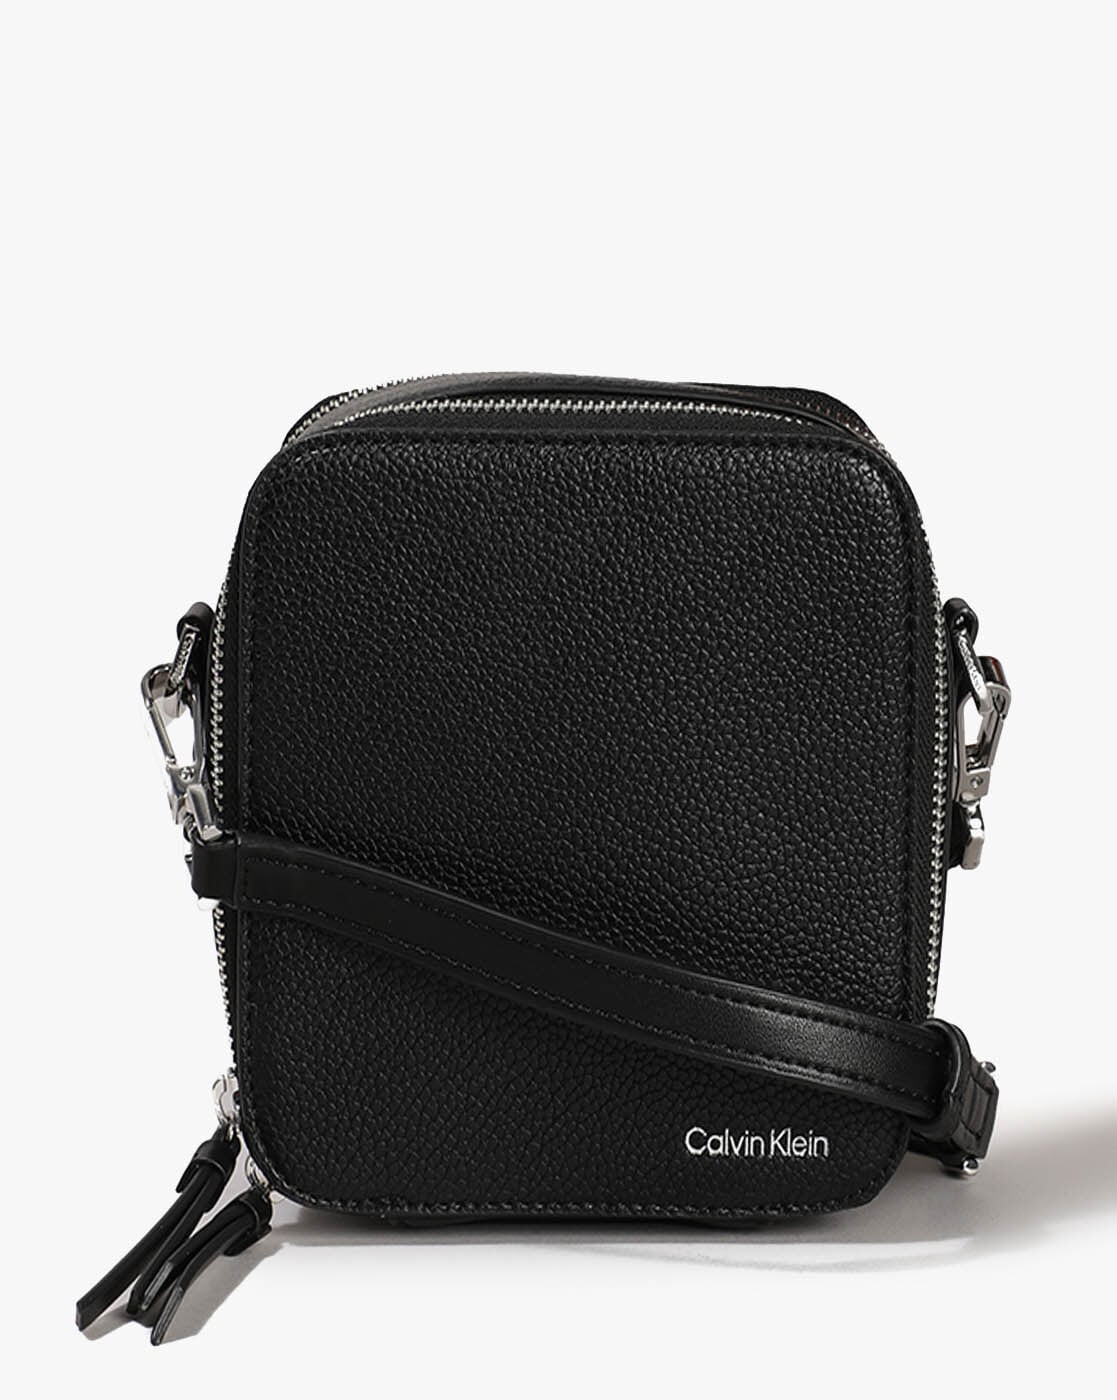 Calvin Klein Mini Saffiano Leather Crossbody (2570 NIO) ❤ liked on Polyvore  featuring bags, handbags, shoulder bags, … | Cross body handbags, Purses  crossbody, Bags